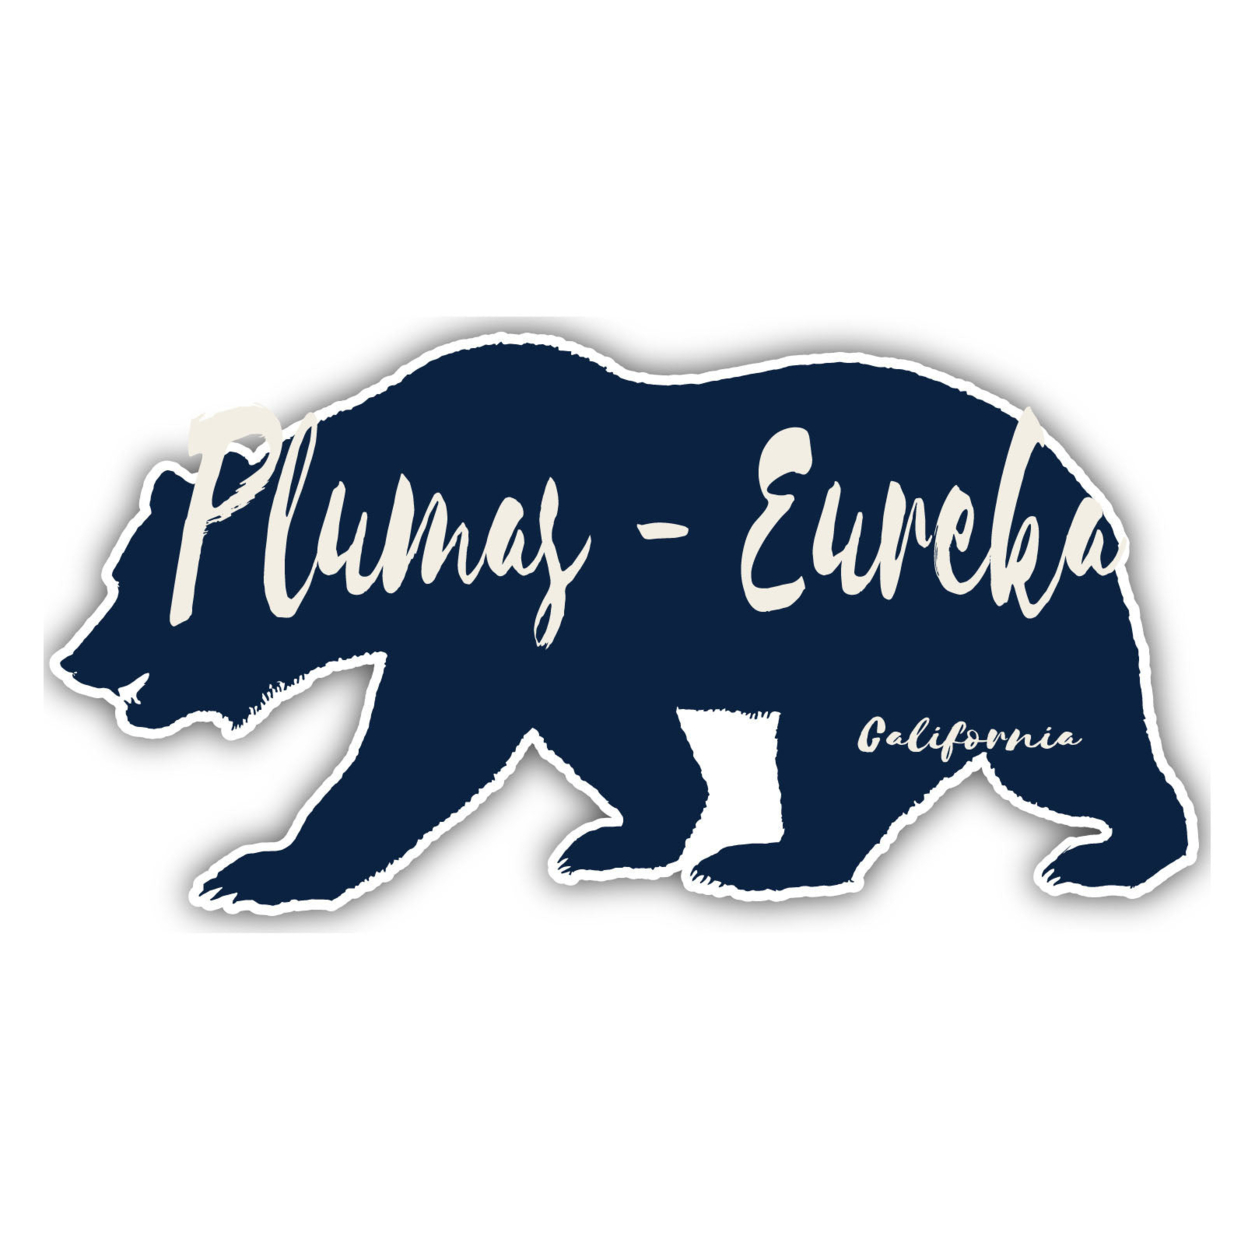 Plumas - Eureka California Souvenir Decorative Stickers (Choose Theme And Size) - Single Unit, 4-Inch, Bear